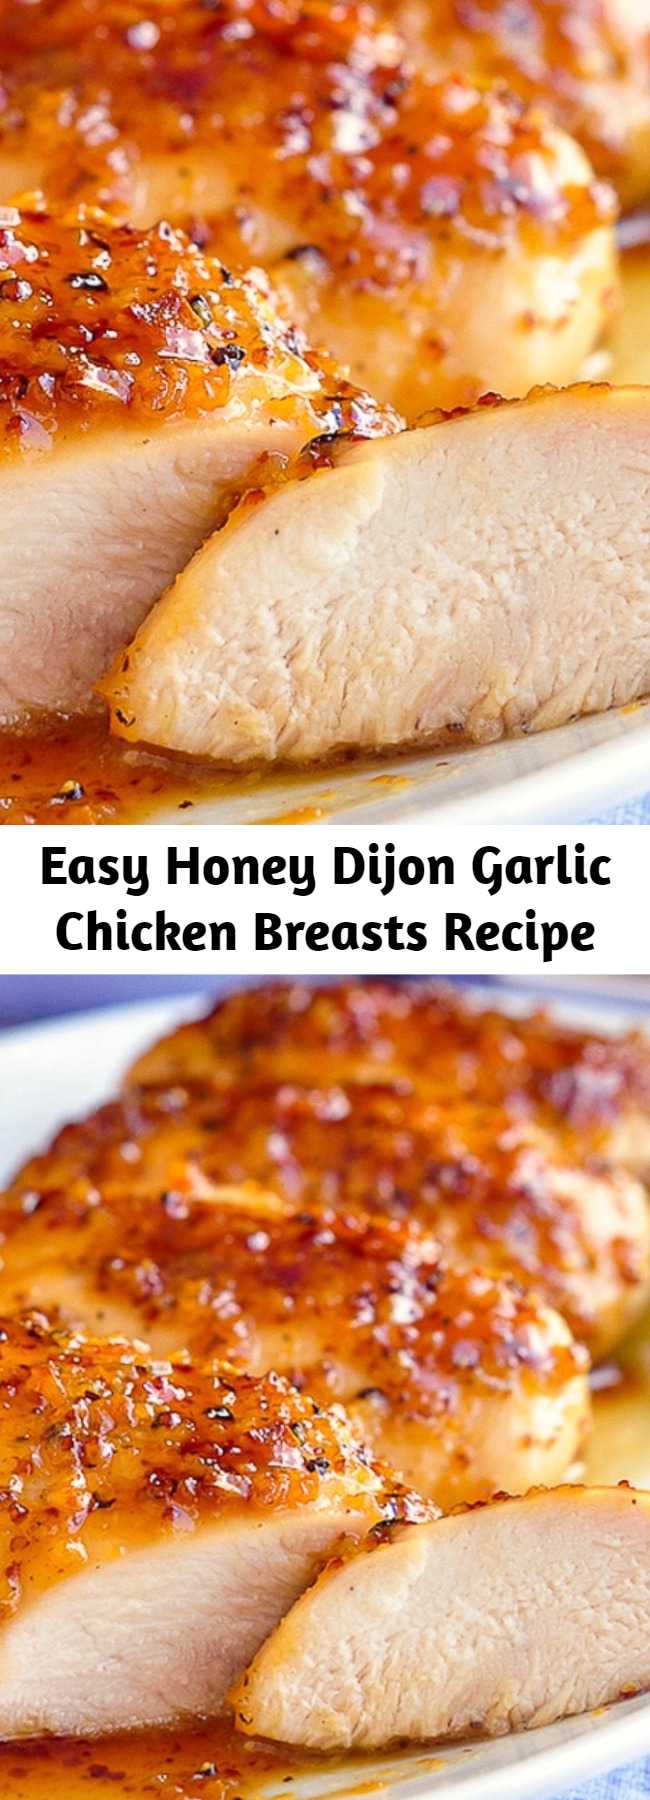 Easy Honey Dijon Garlic Chicken Breasts Recipe - Boneless skinless chicken Breasts quickly baked in an intensely flavoured honey, garlic and Dijon mustard glaze.